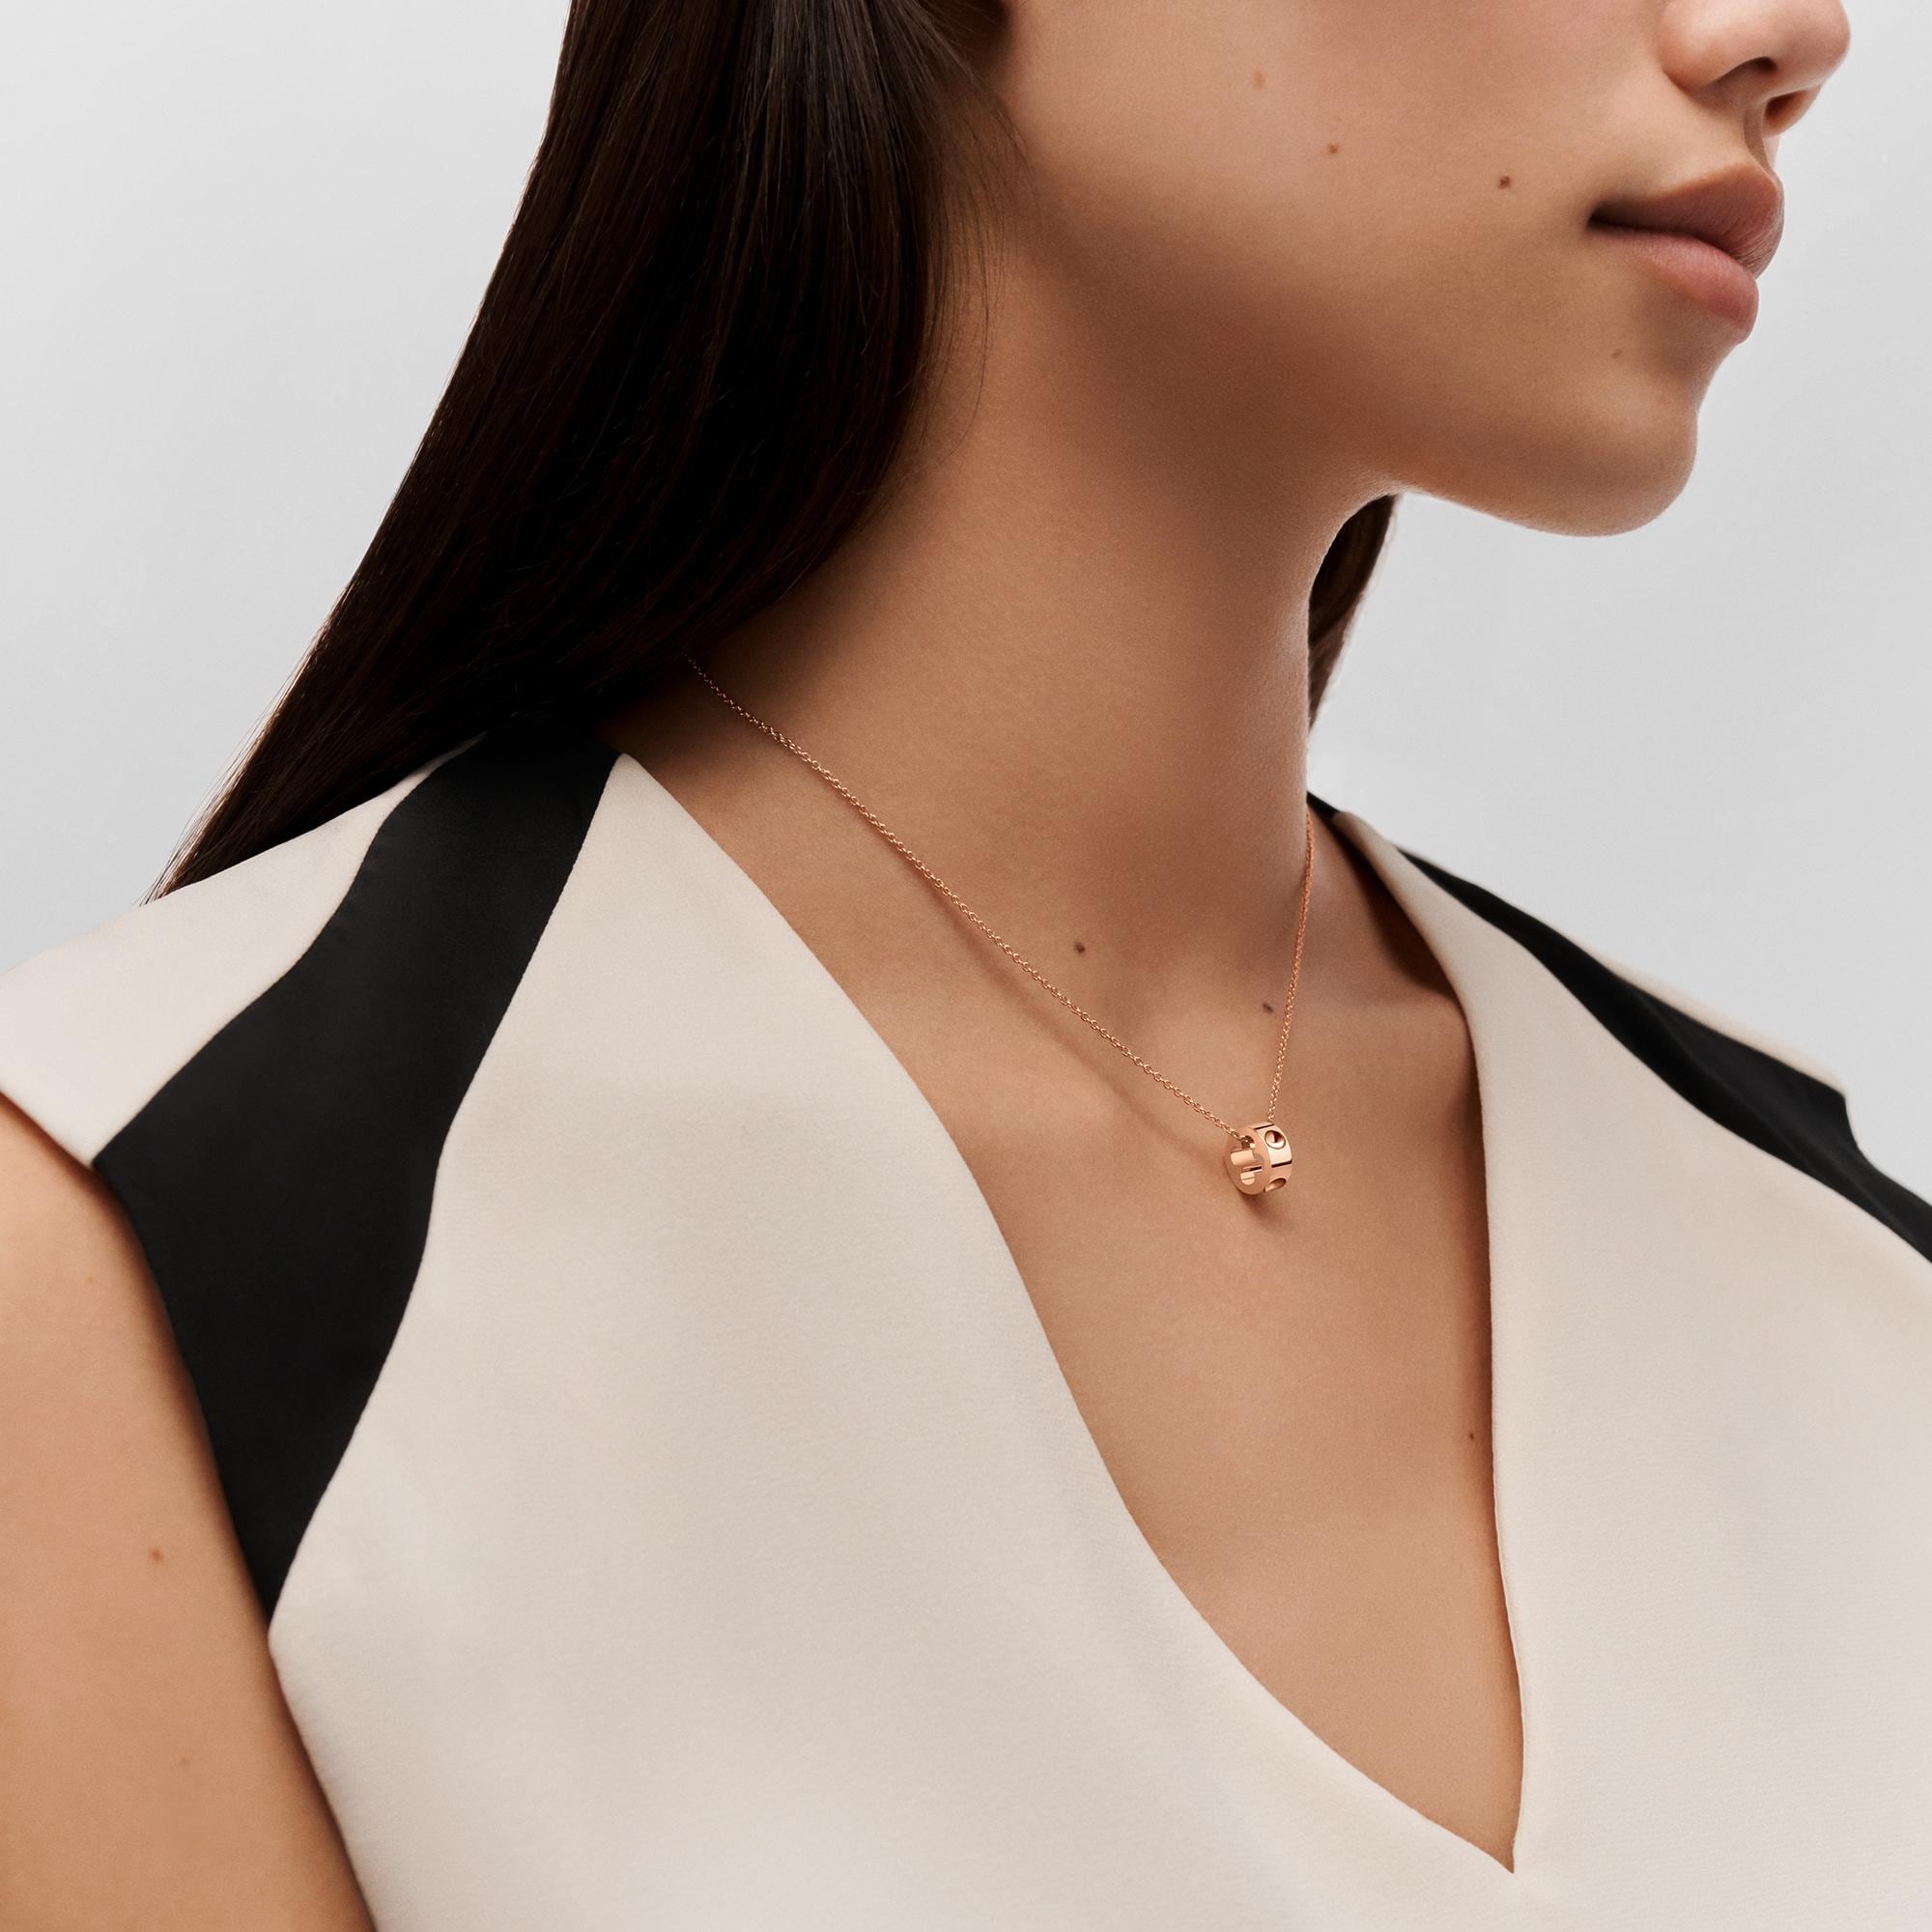 Louis Vuitton EMPREINTE PENDANT, PINK GOLD – Jewelry – Categories Q93673